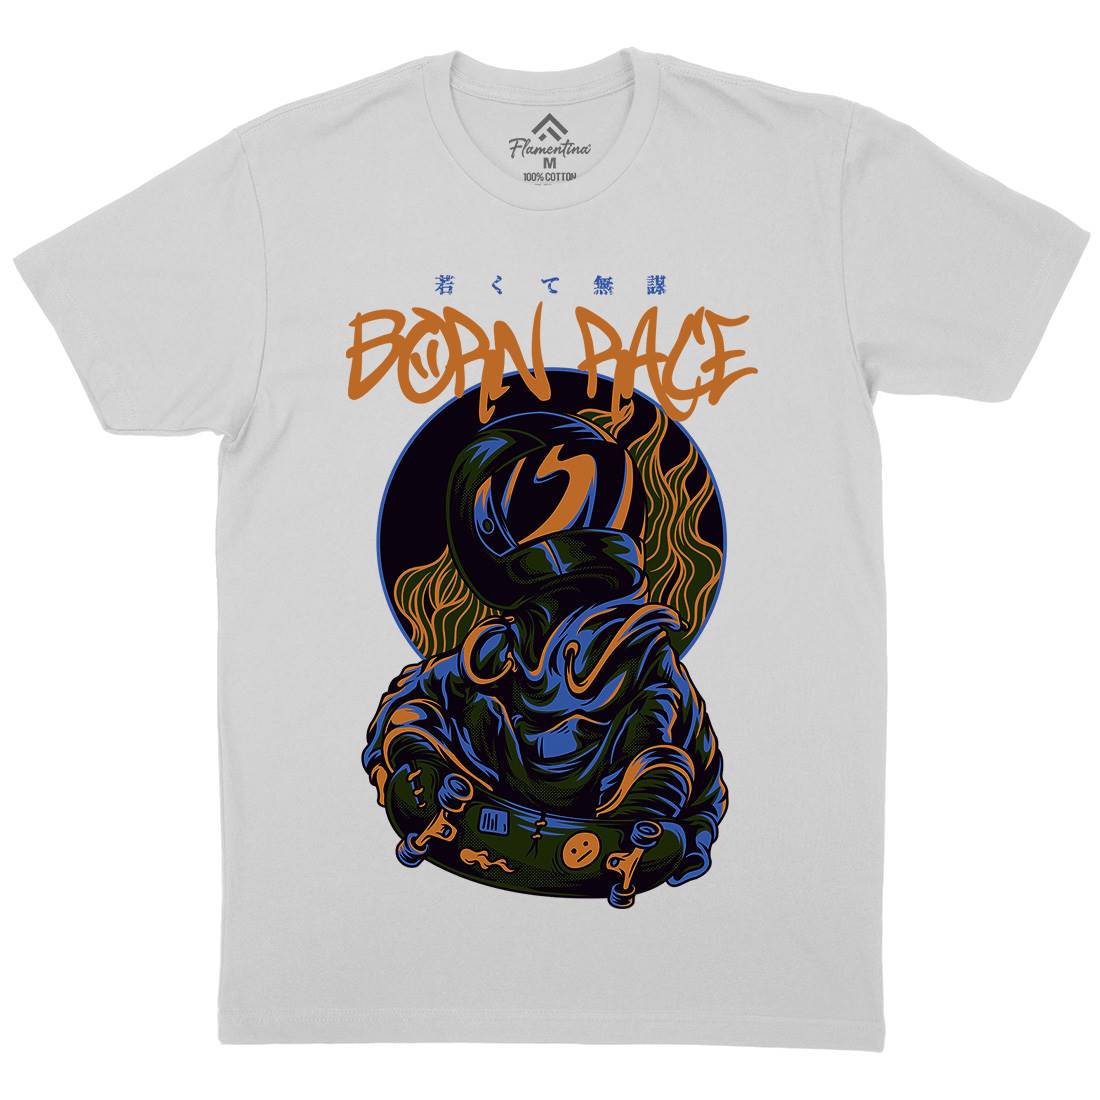 Born Race Mens Crew Neck T-Shirt Skate D718